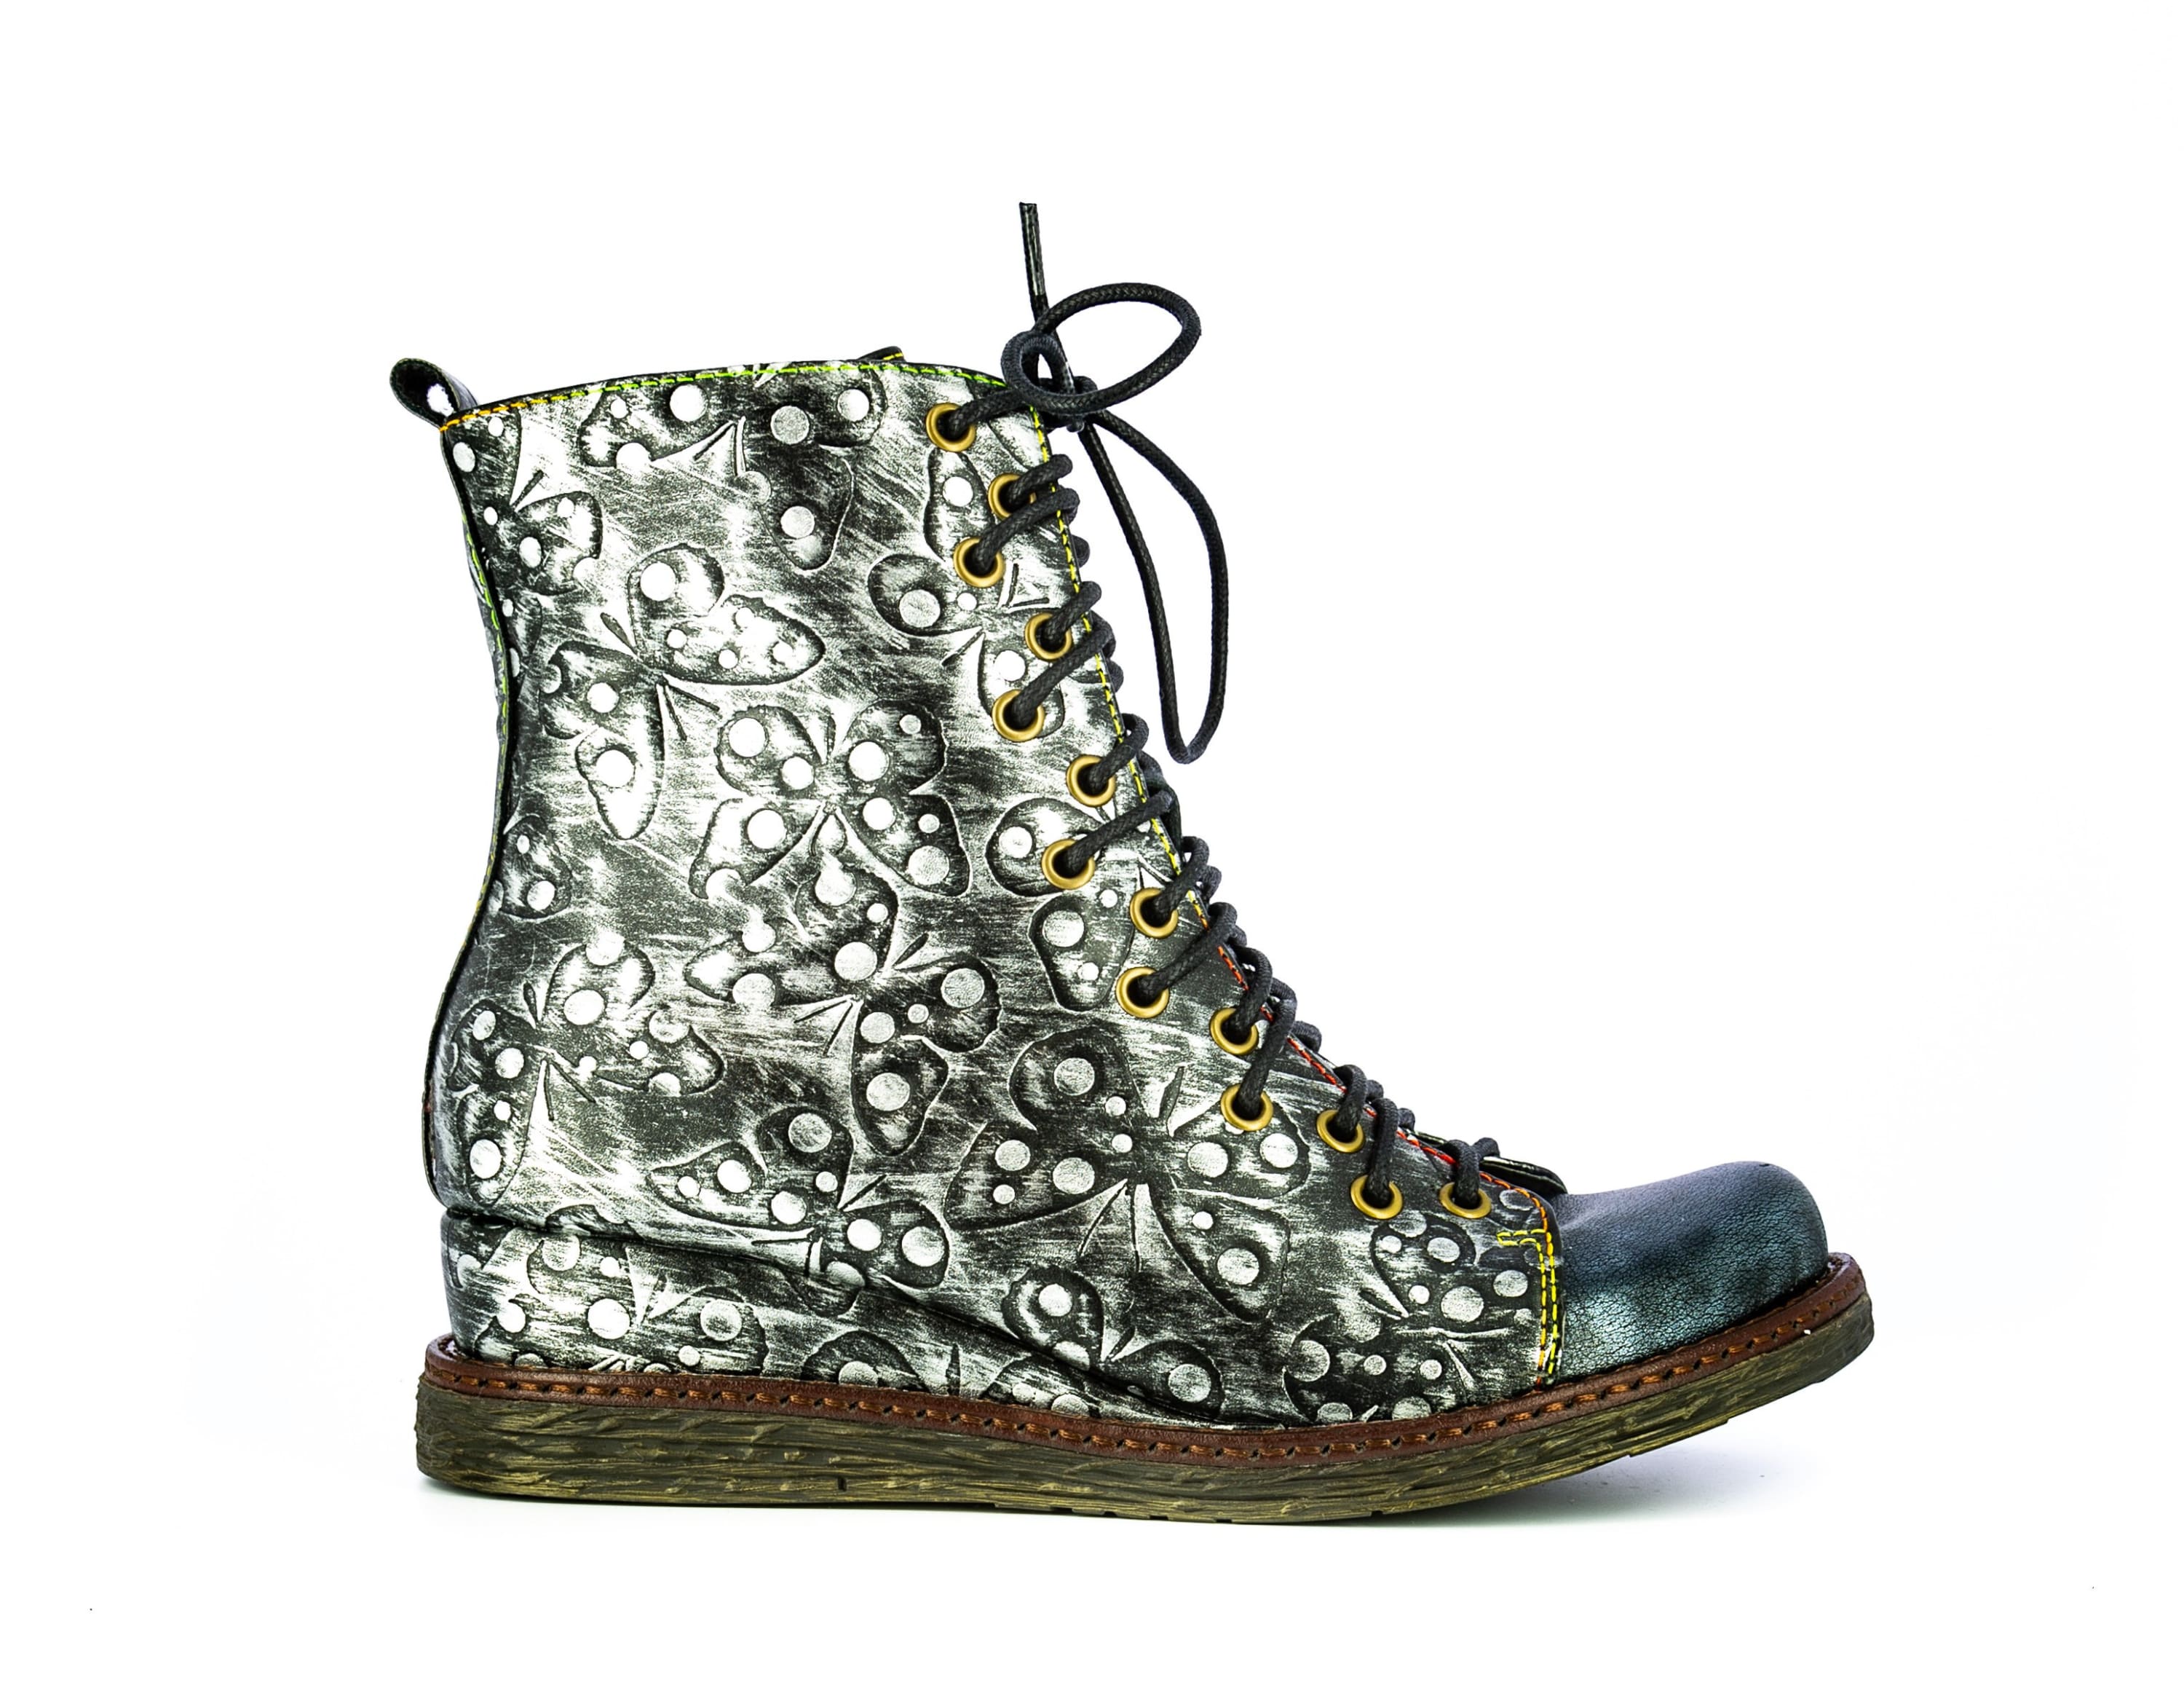 Chaussure ERCNAULTO 32 - 35 / Acier - Boots